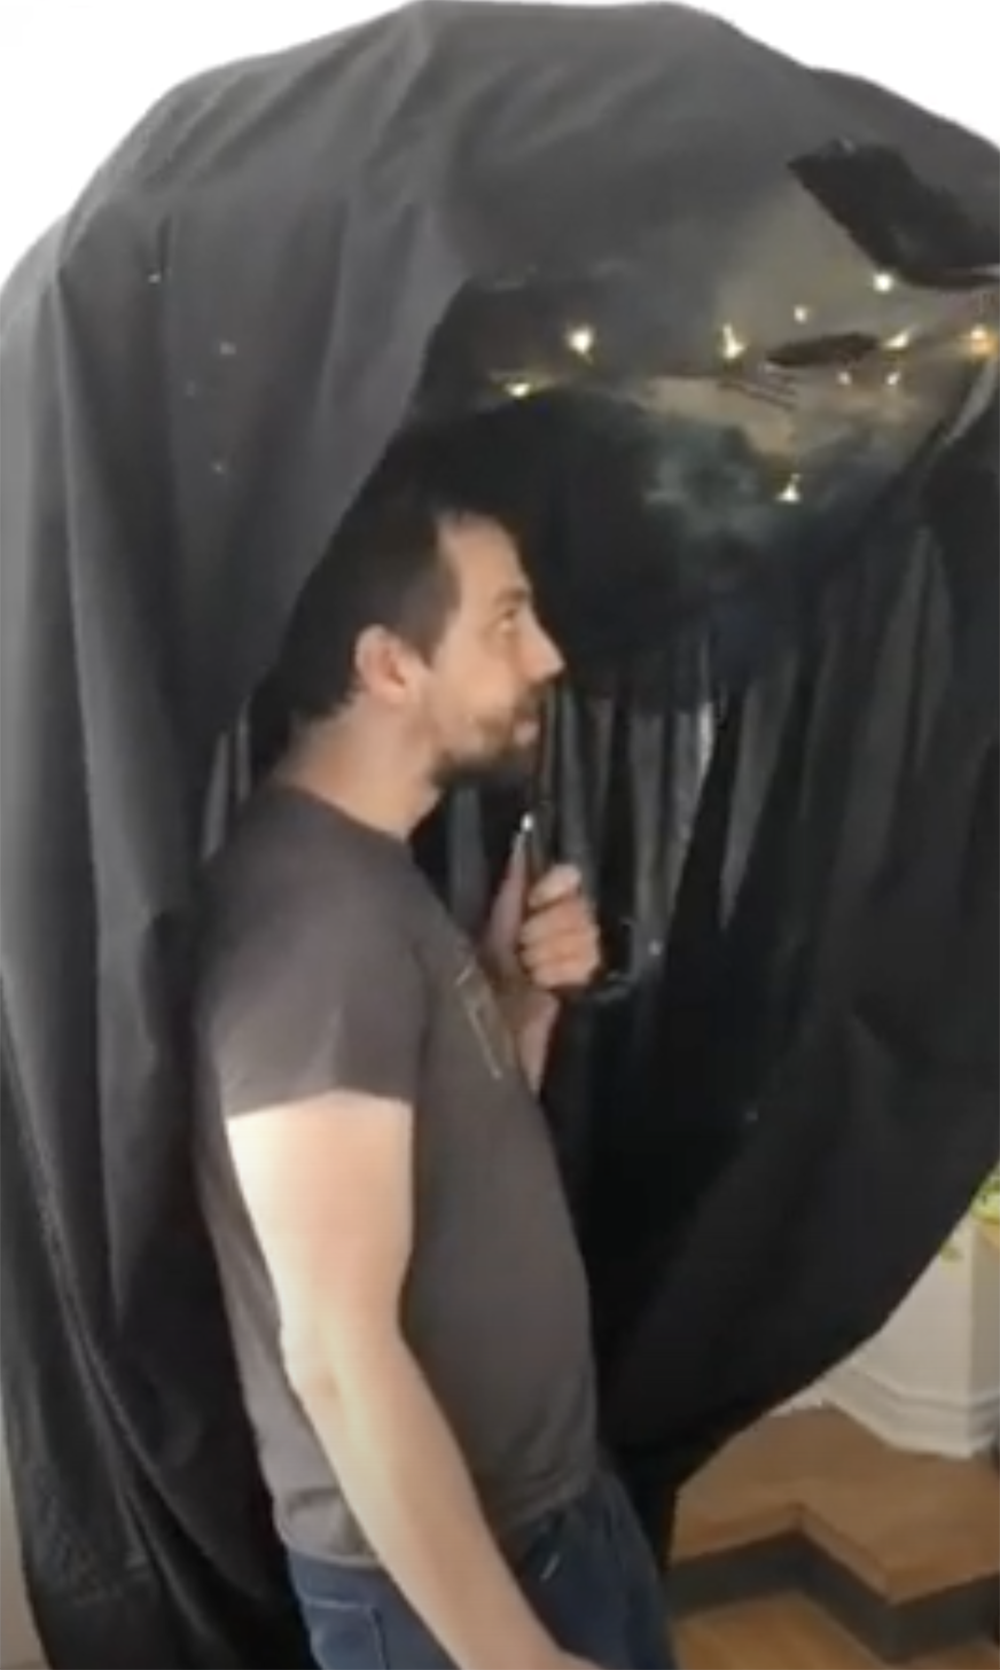 a man standing under an umbrella, indoors, a blanket is around the umbrella